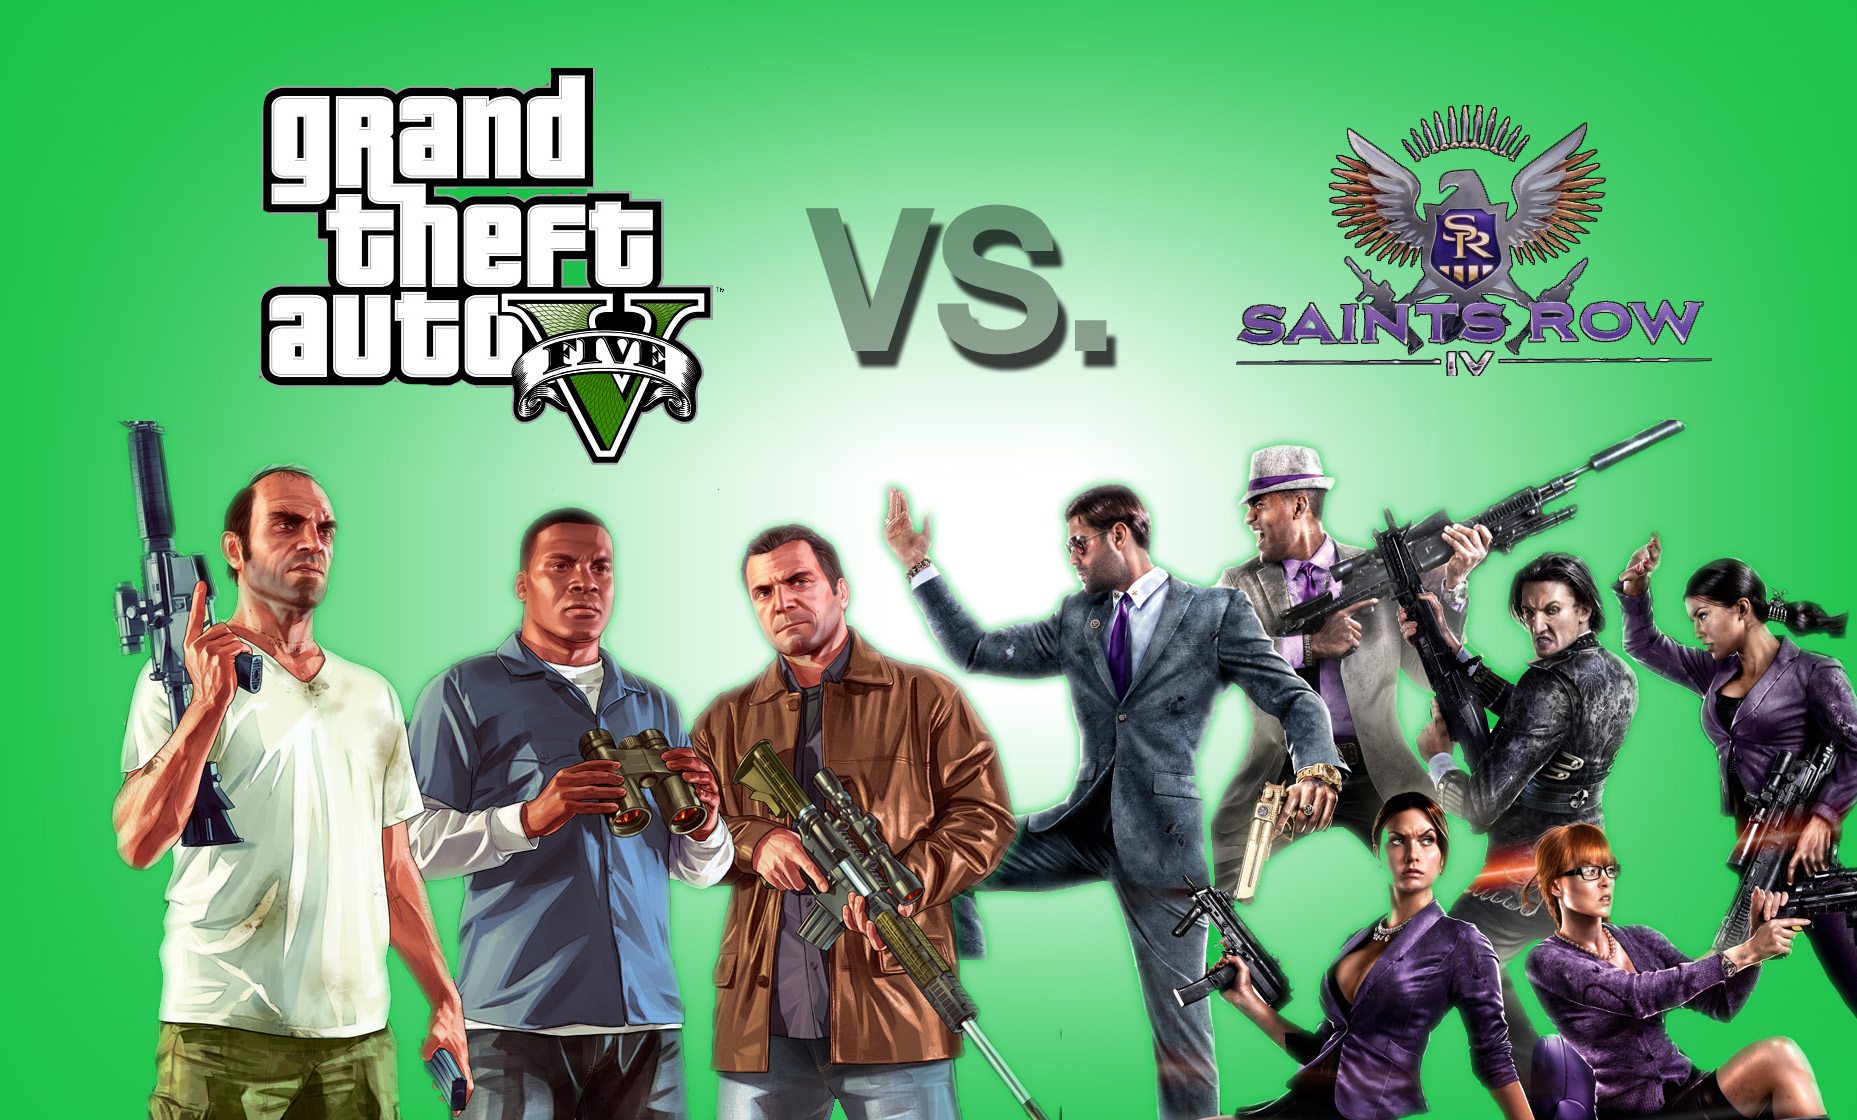 GTA 5 vs. Saints Row 4 (comparison)